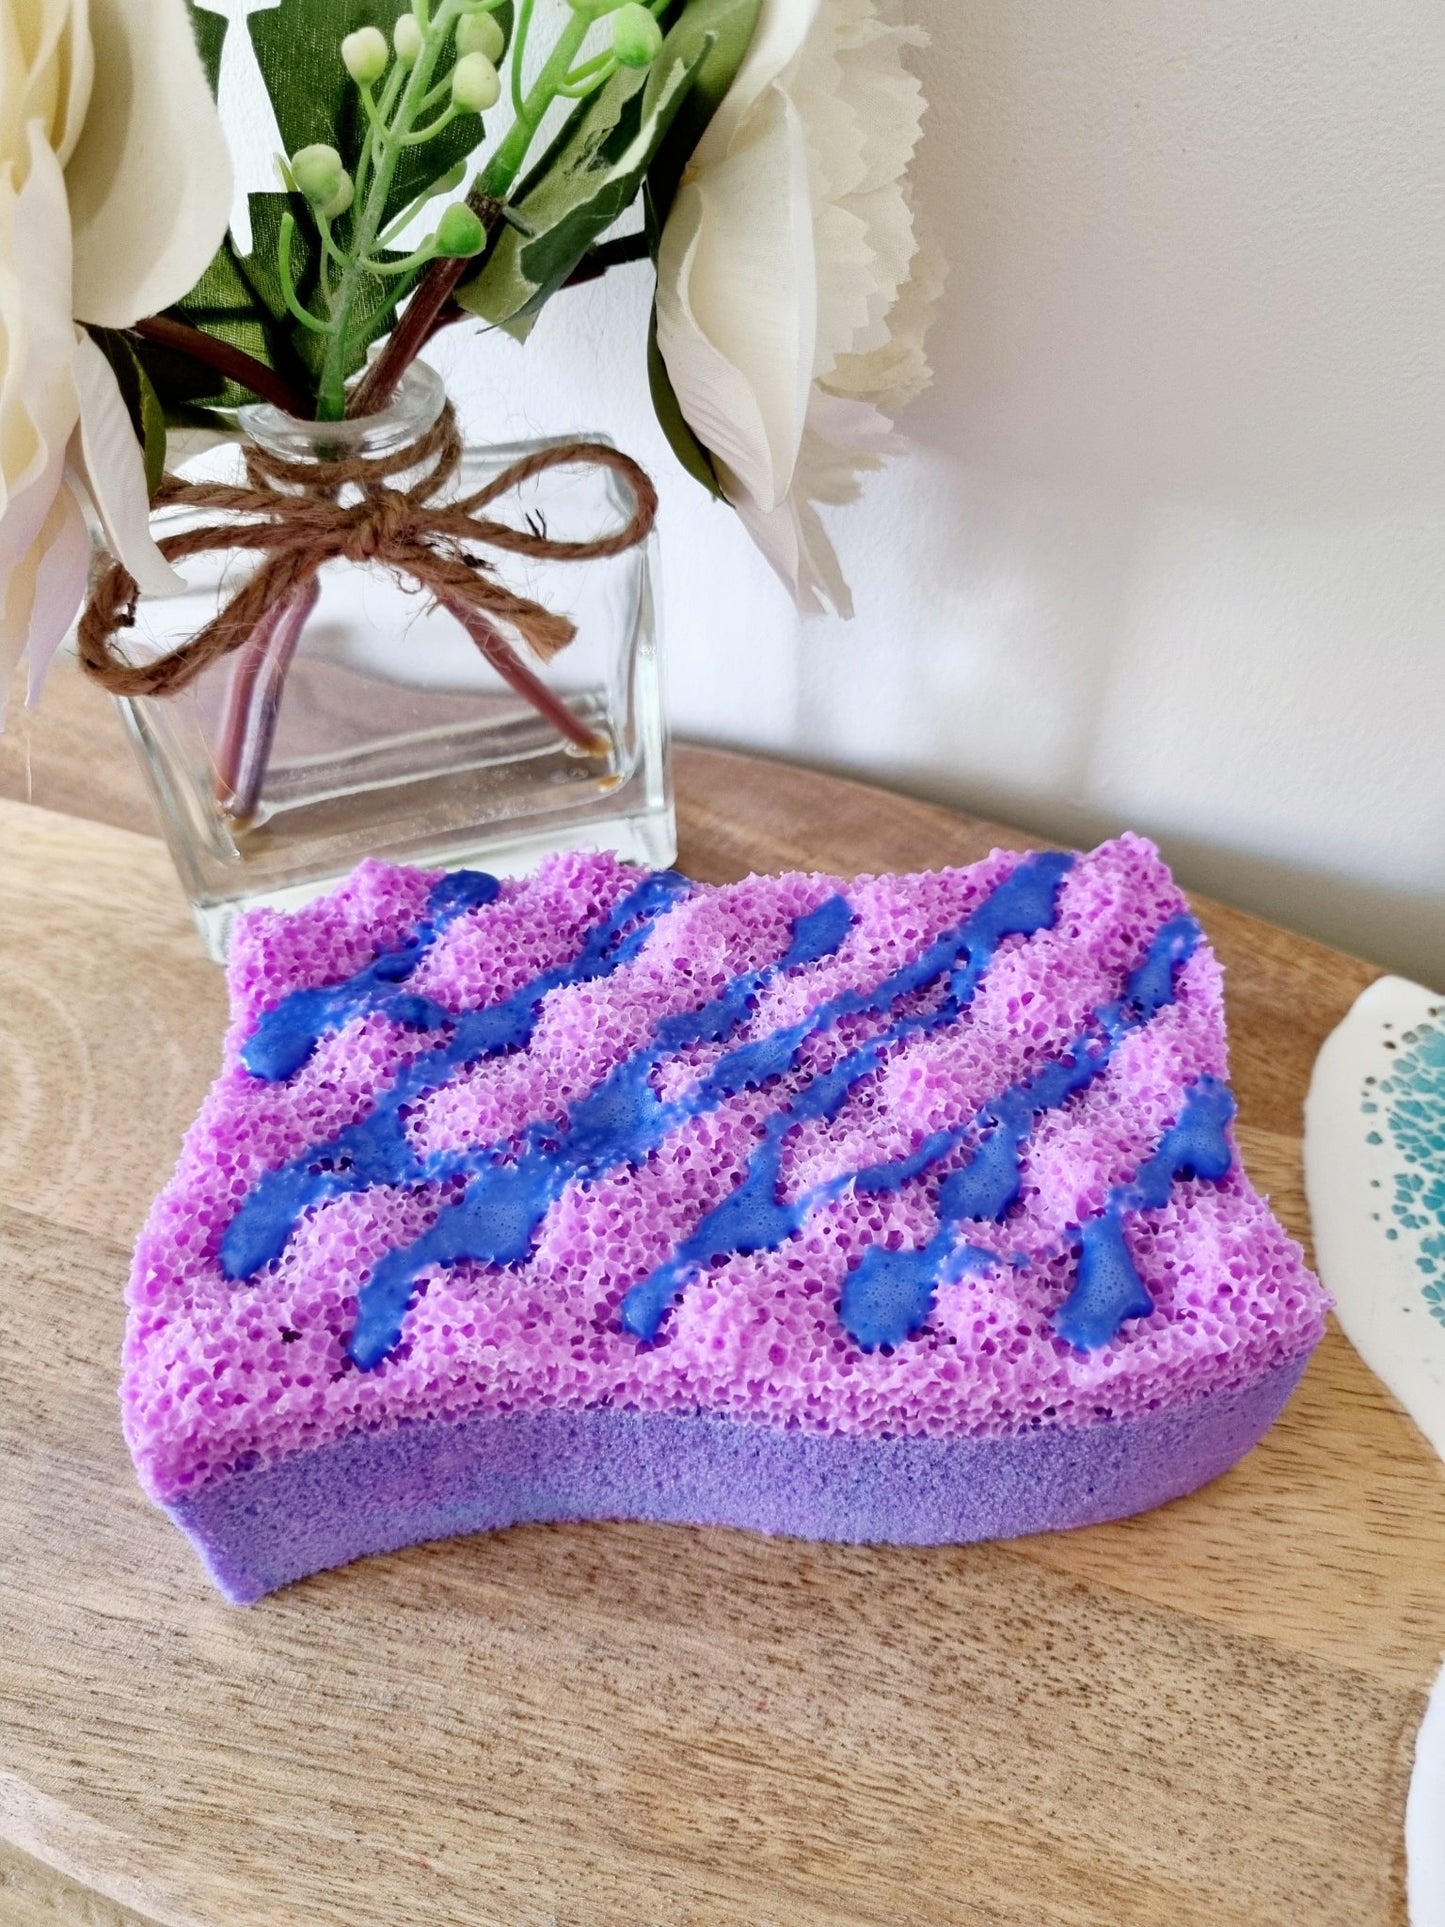 LIMITED EDITION - Wavy Soap Infused Exfoliating Massage Sponge - Soap Sponge - Cottage Fresh Scents